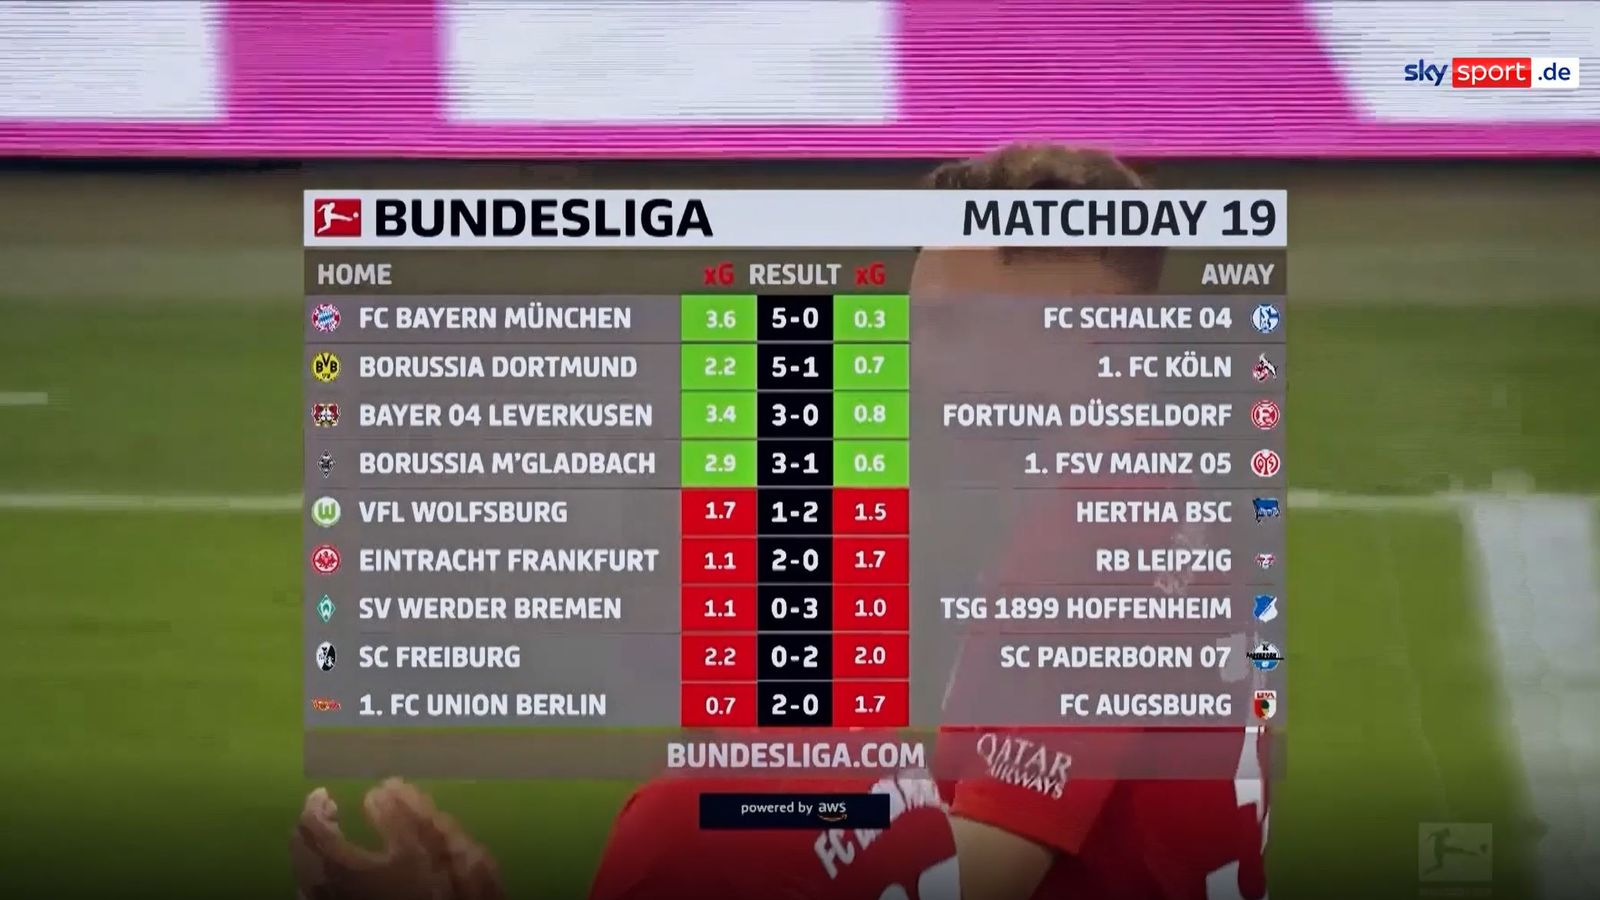 Bildergalerie Bundesliga Match Facts powered by AWS Fußball News